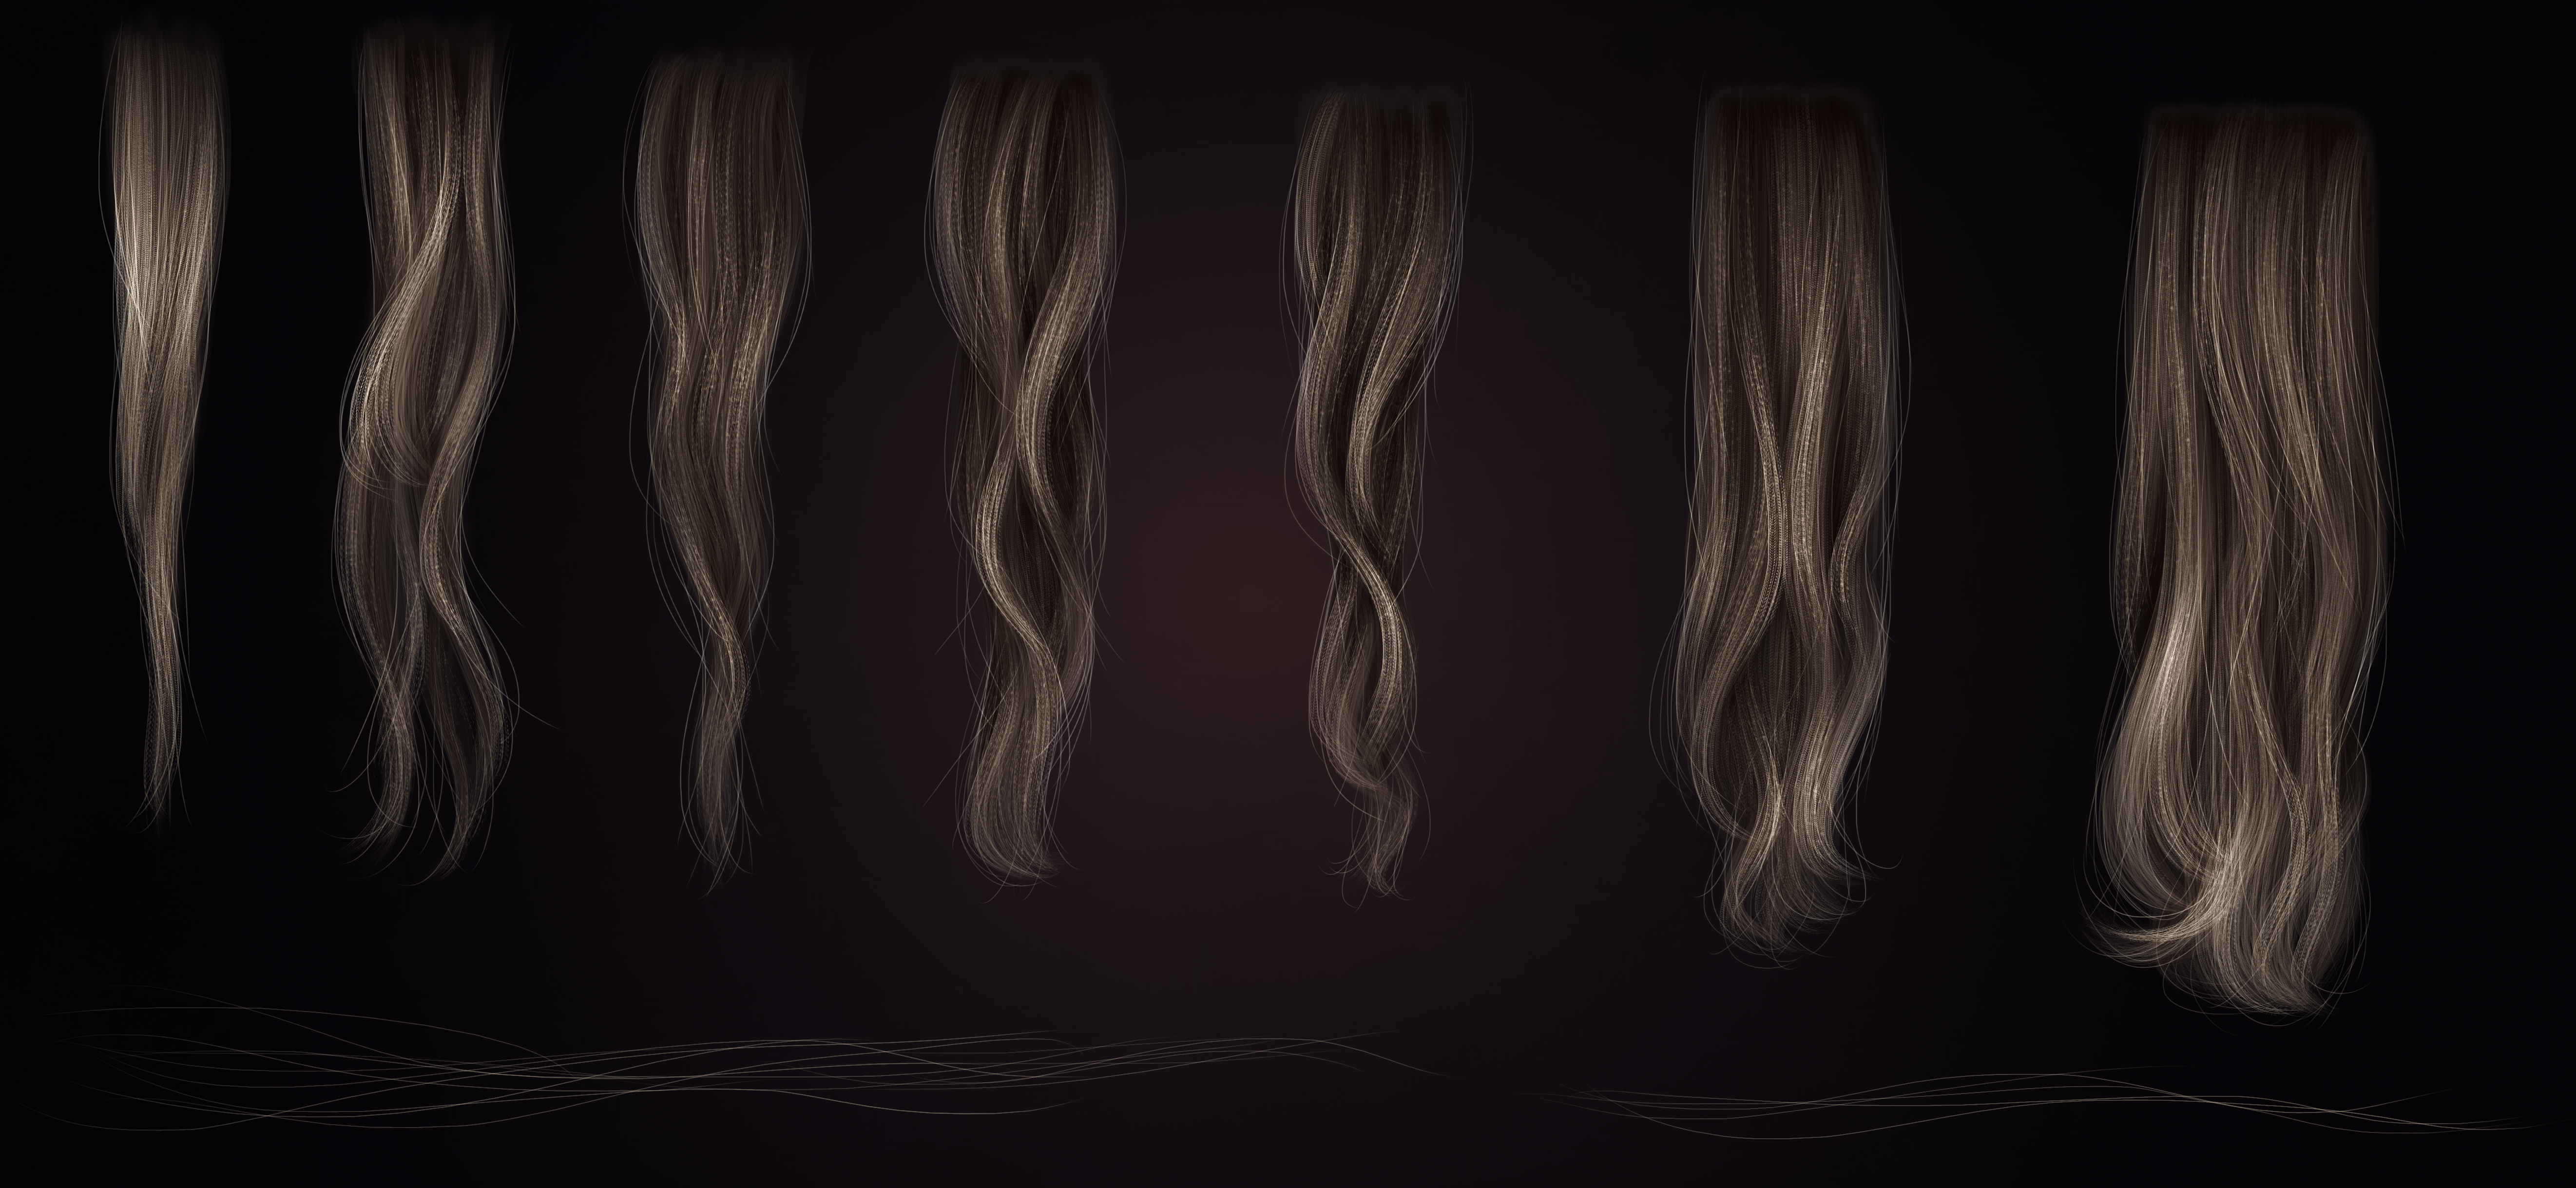 Sonya Alpha Hair 001 by deperla on DeviantArt